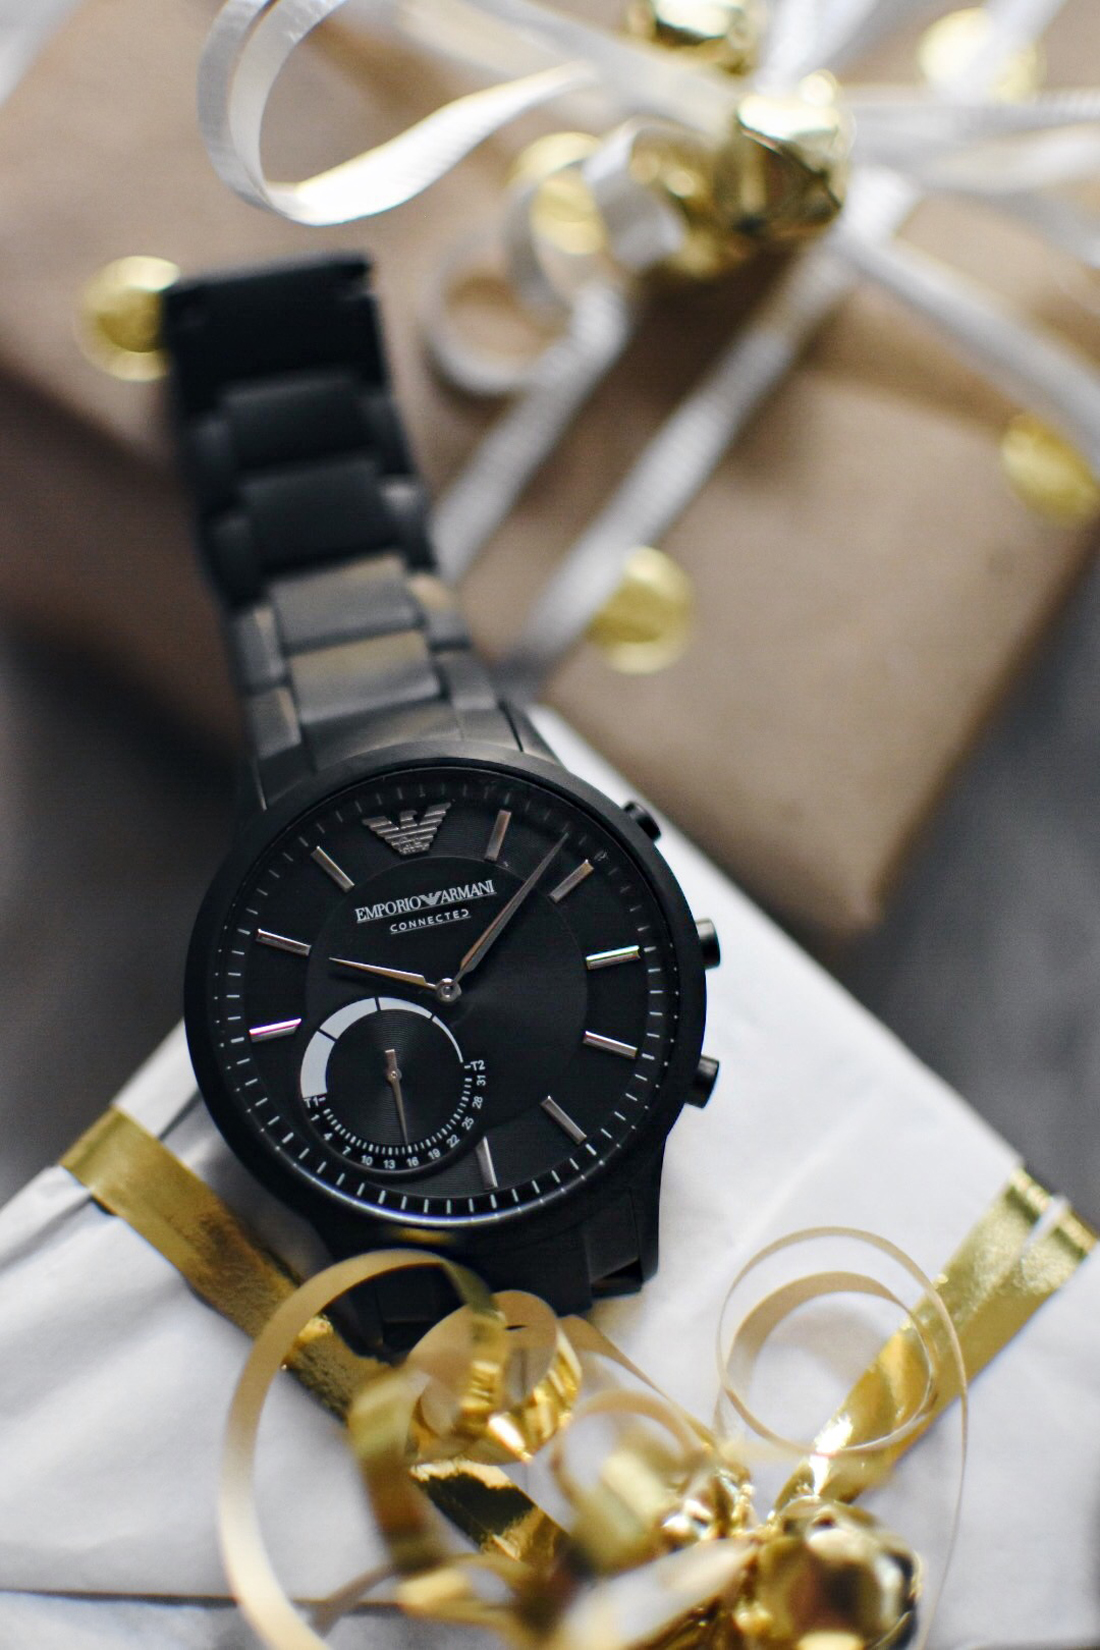 Emporio Armani hybrid watch